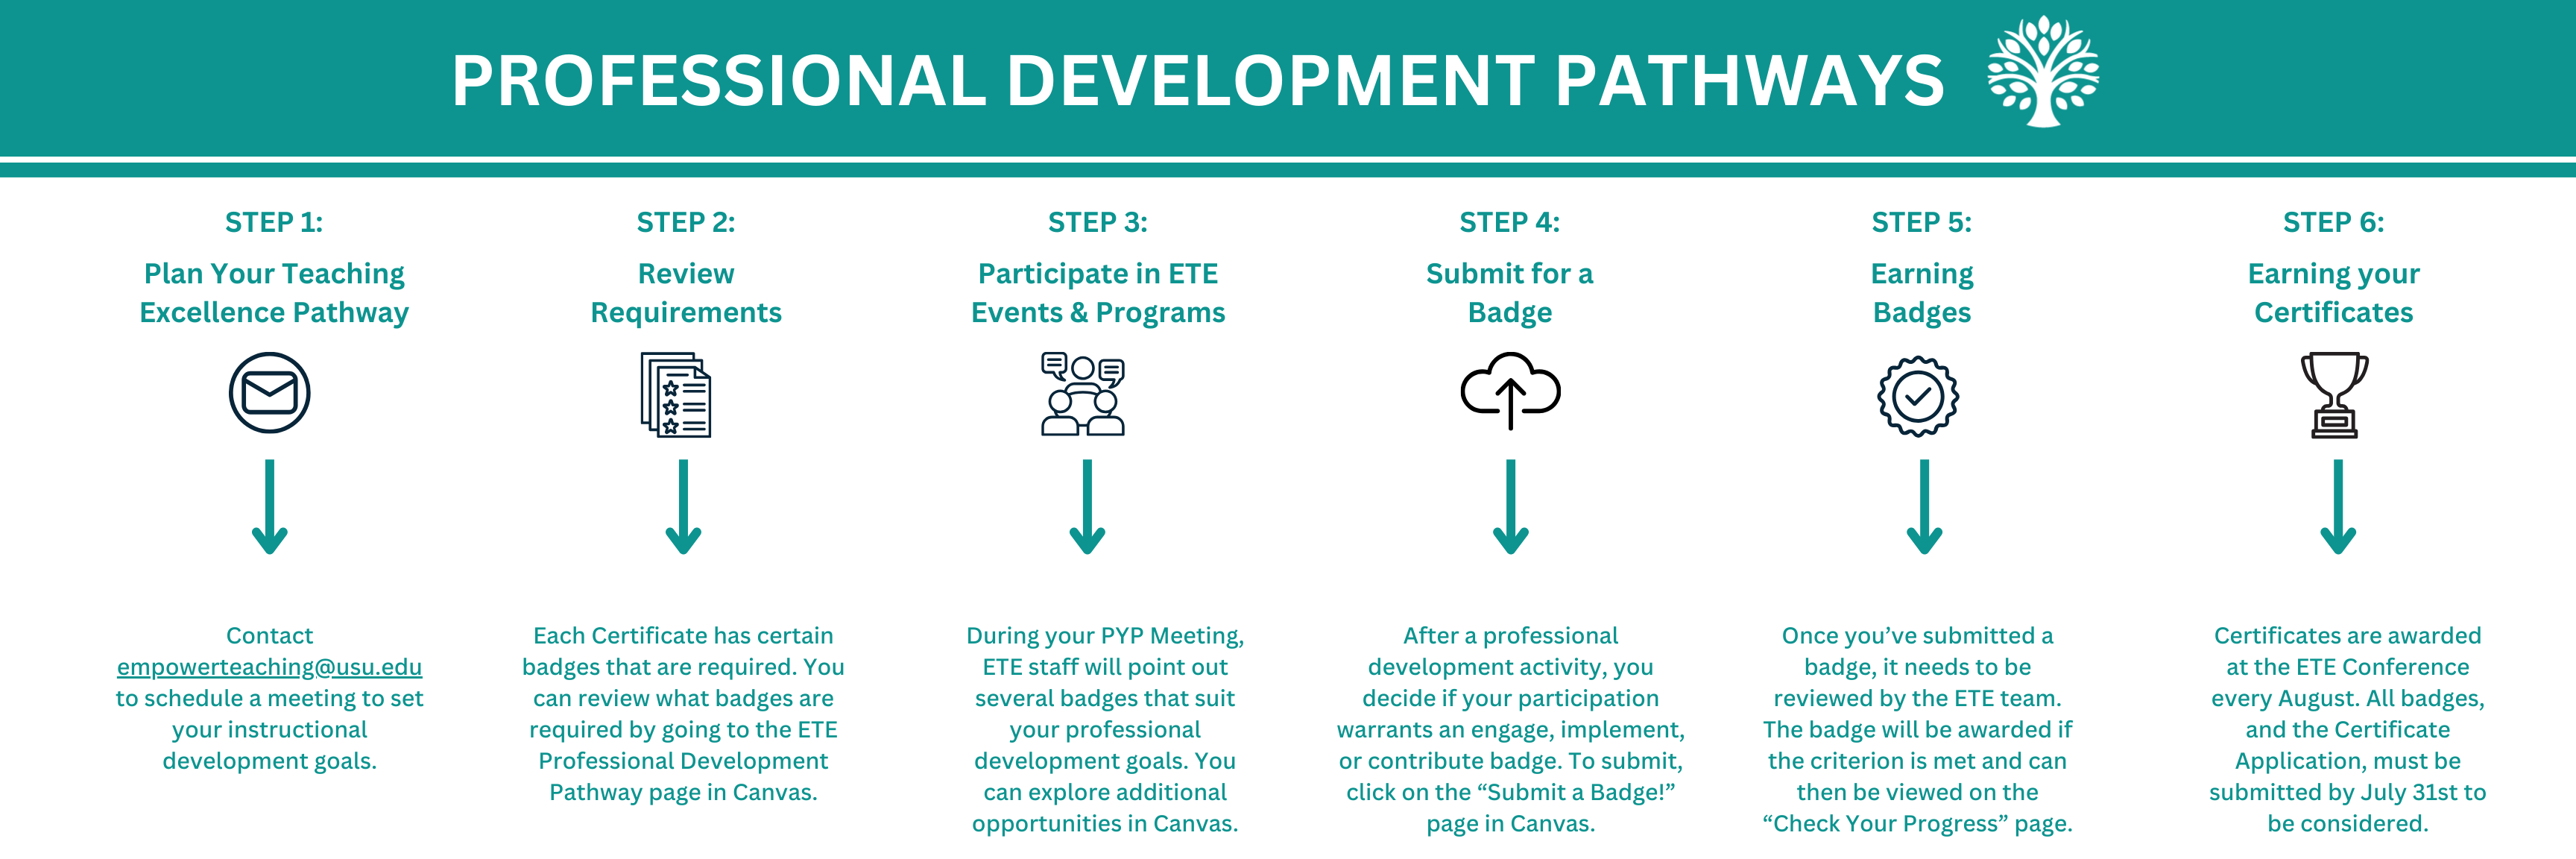 Professional Development Pathways